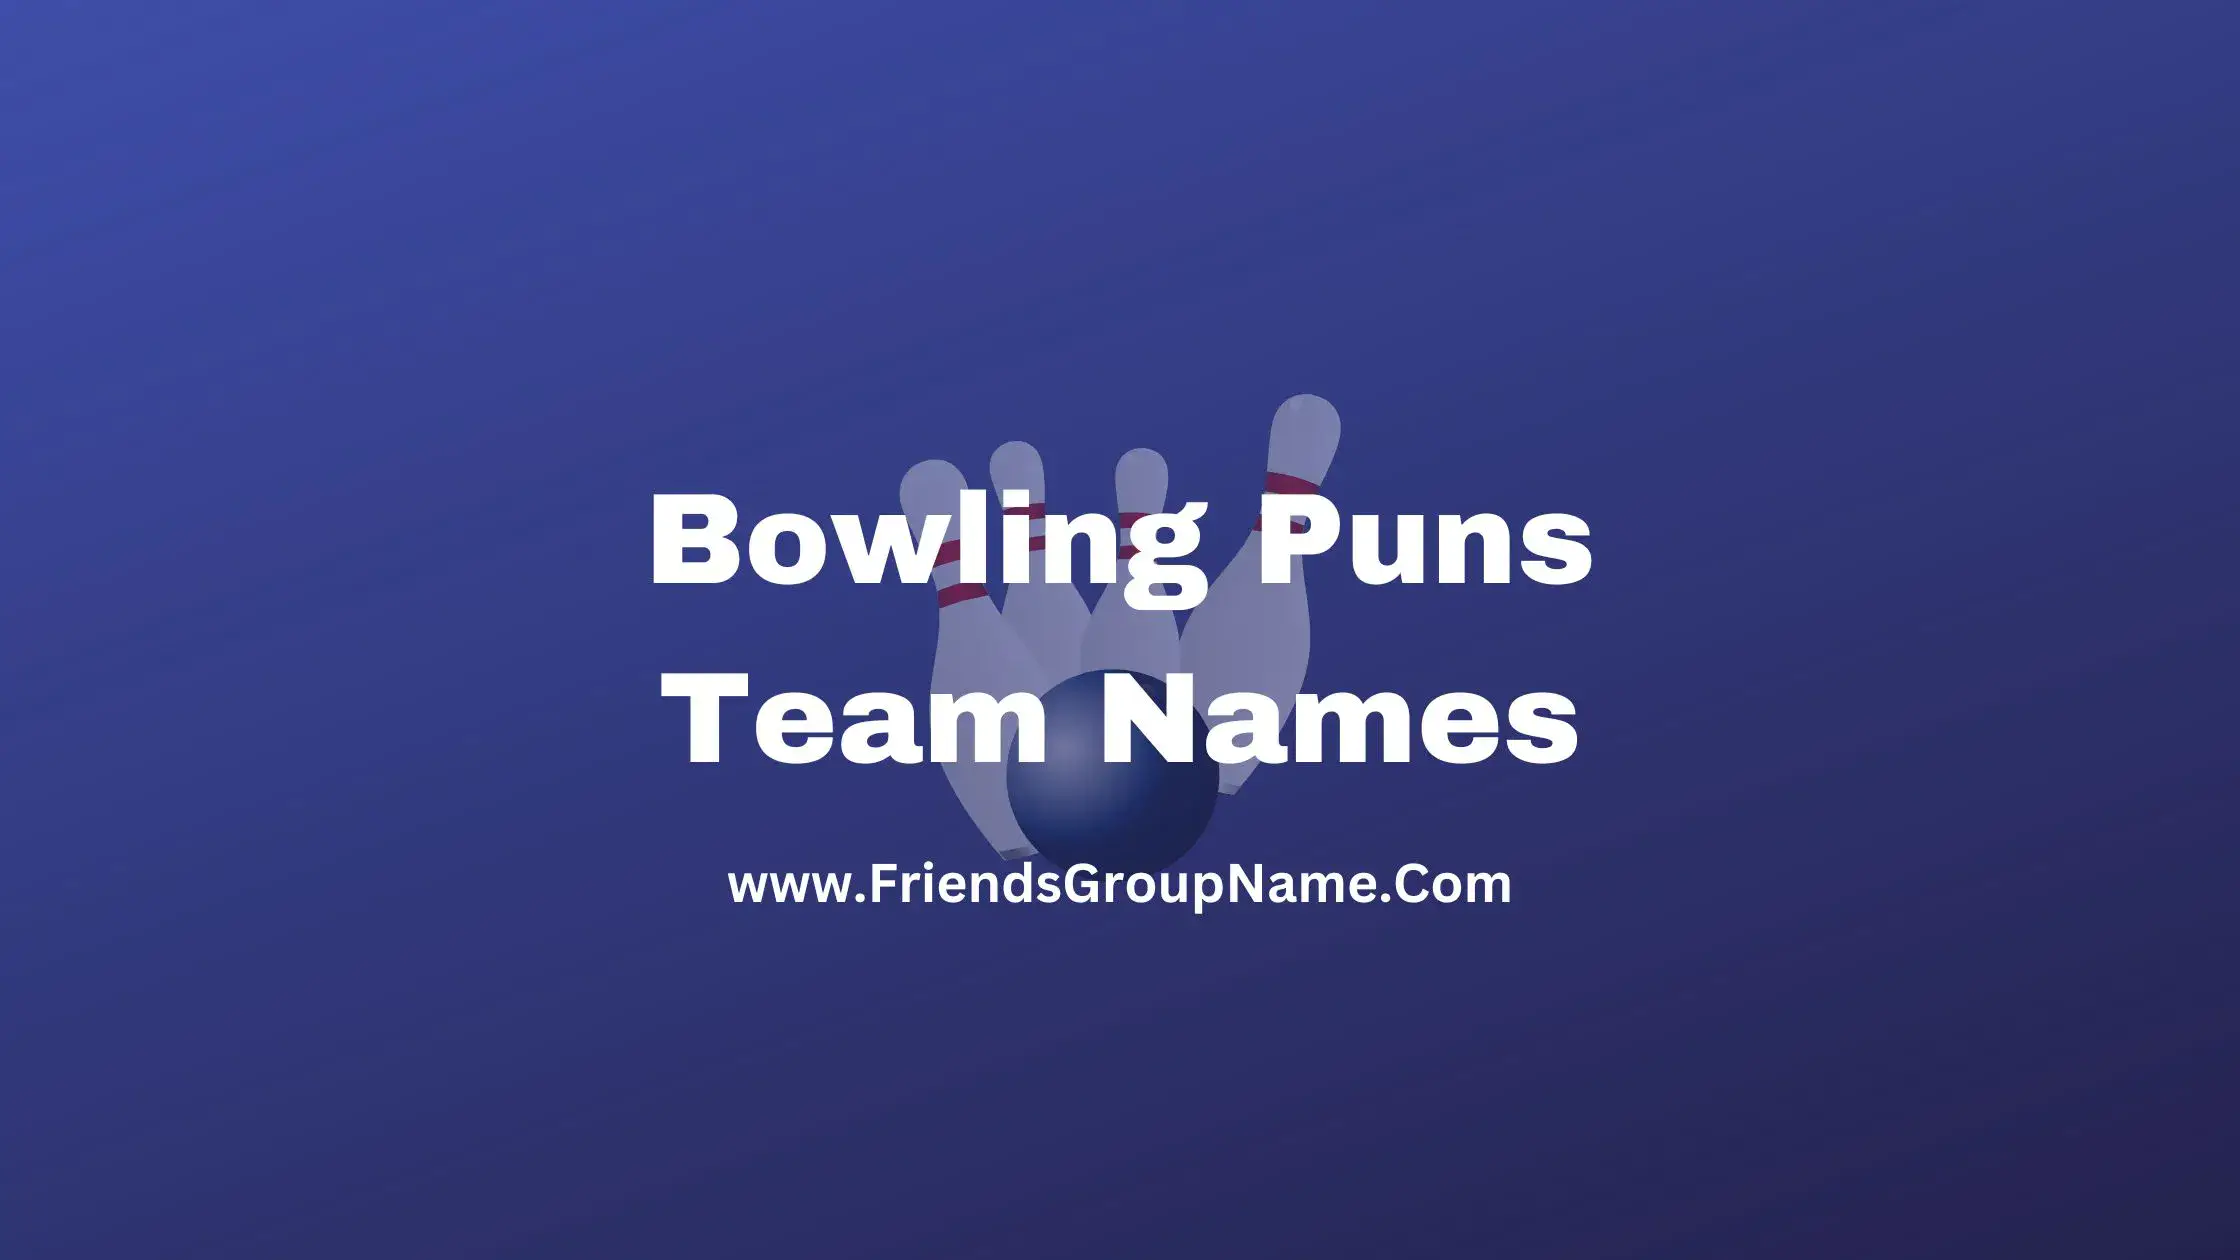 Bowling Puns Team Names